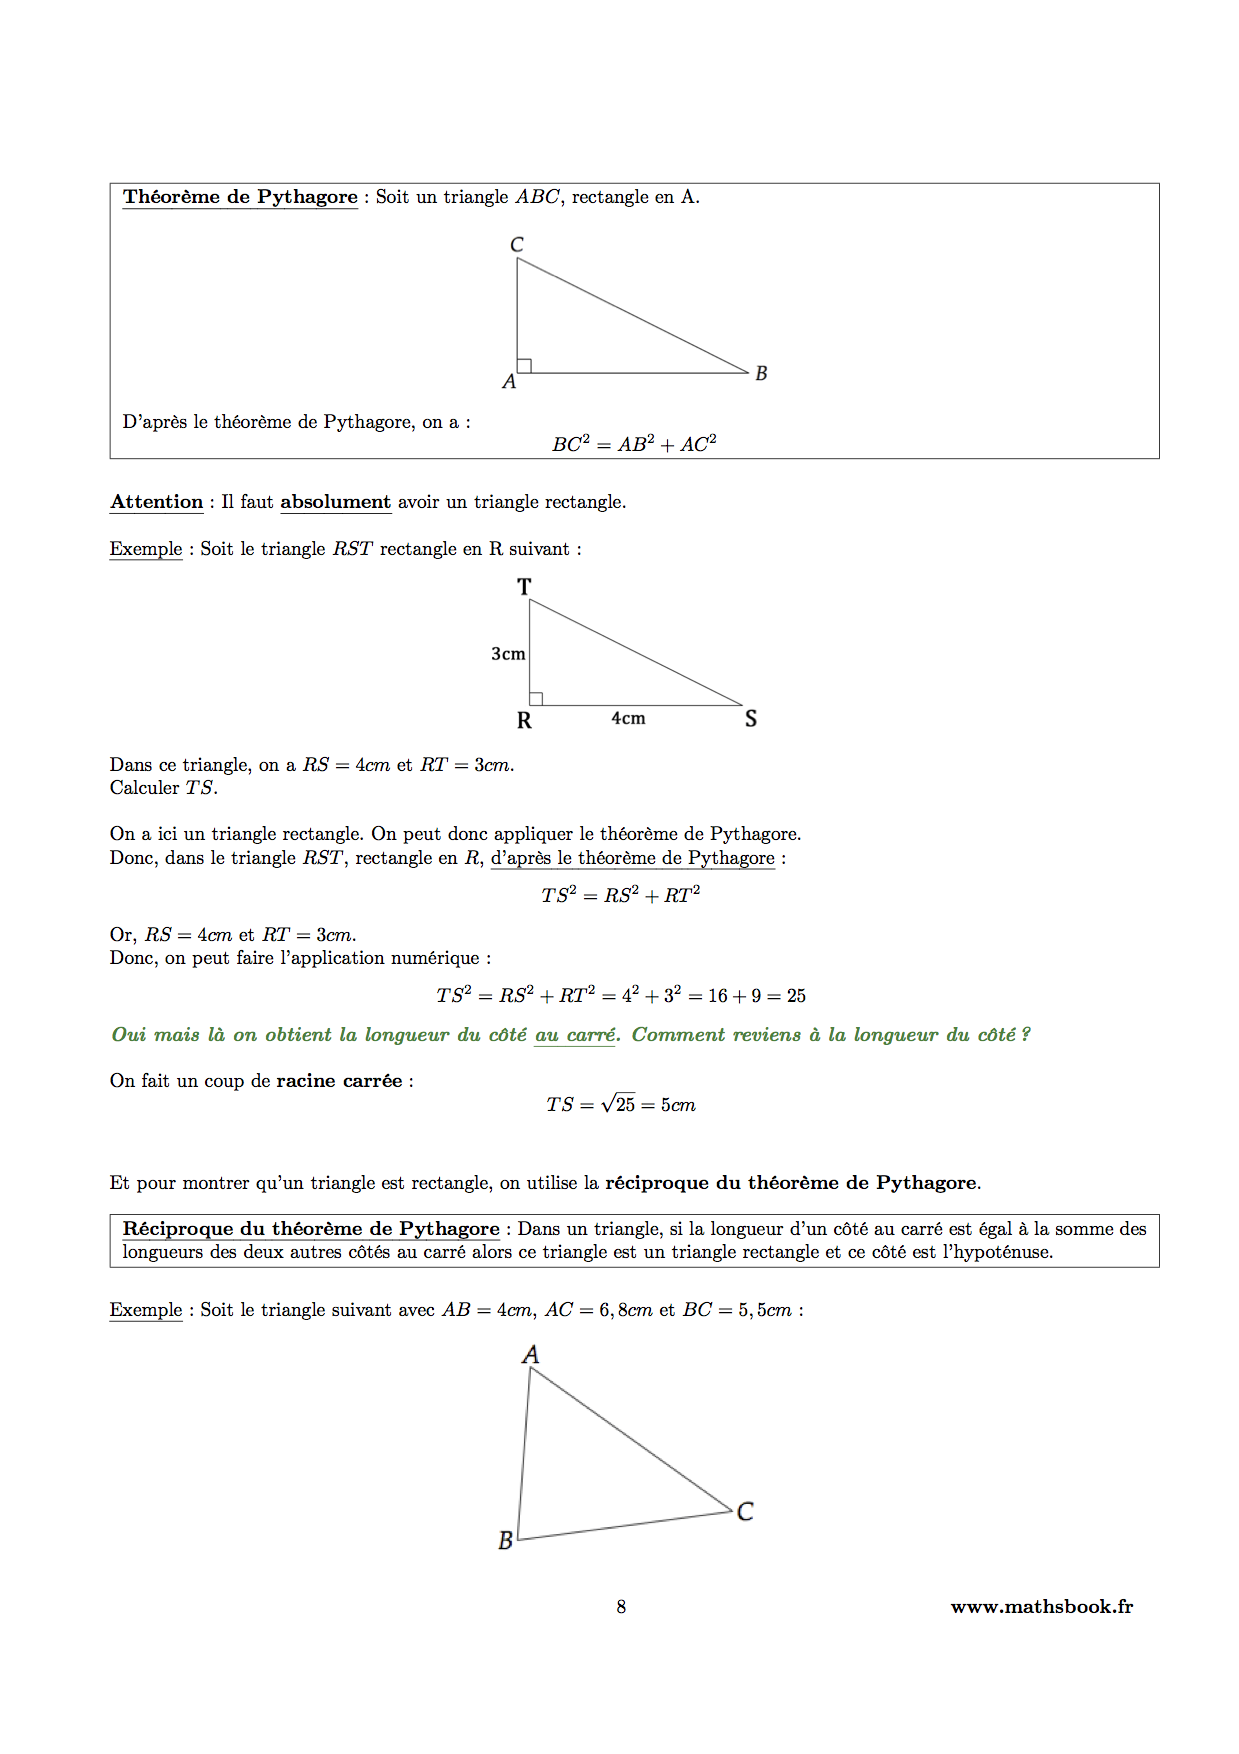 theoreme de pythagore et reciproque